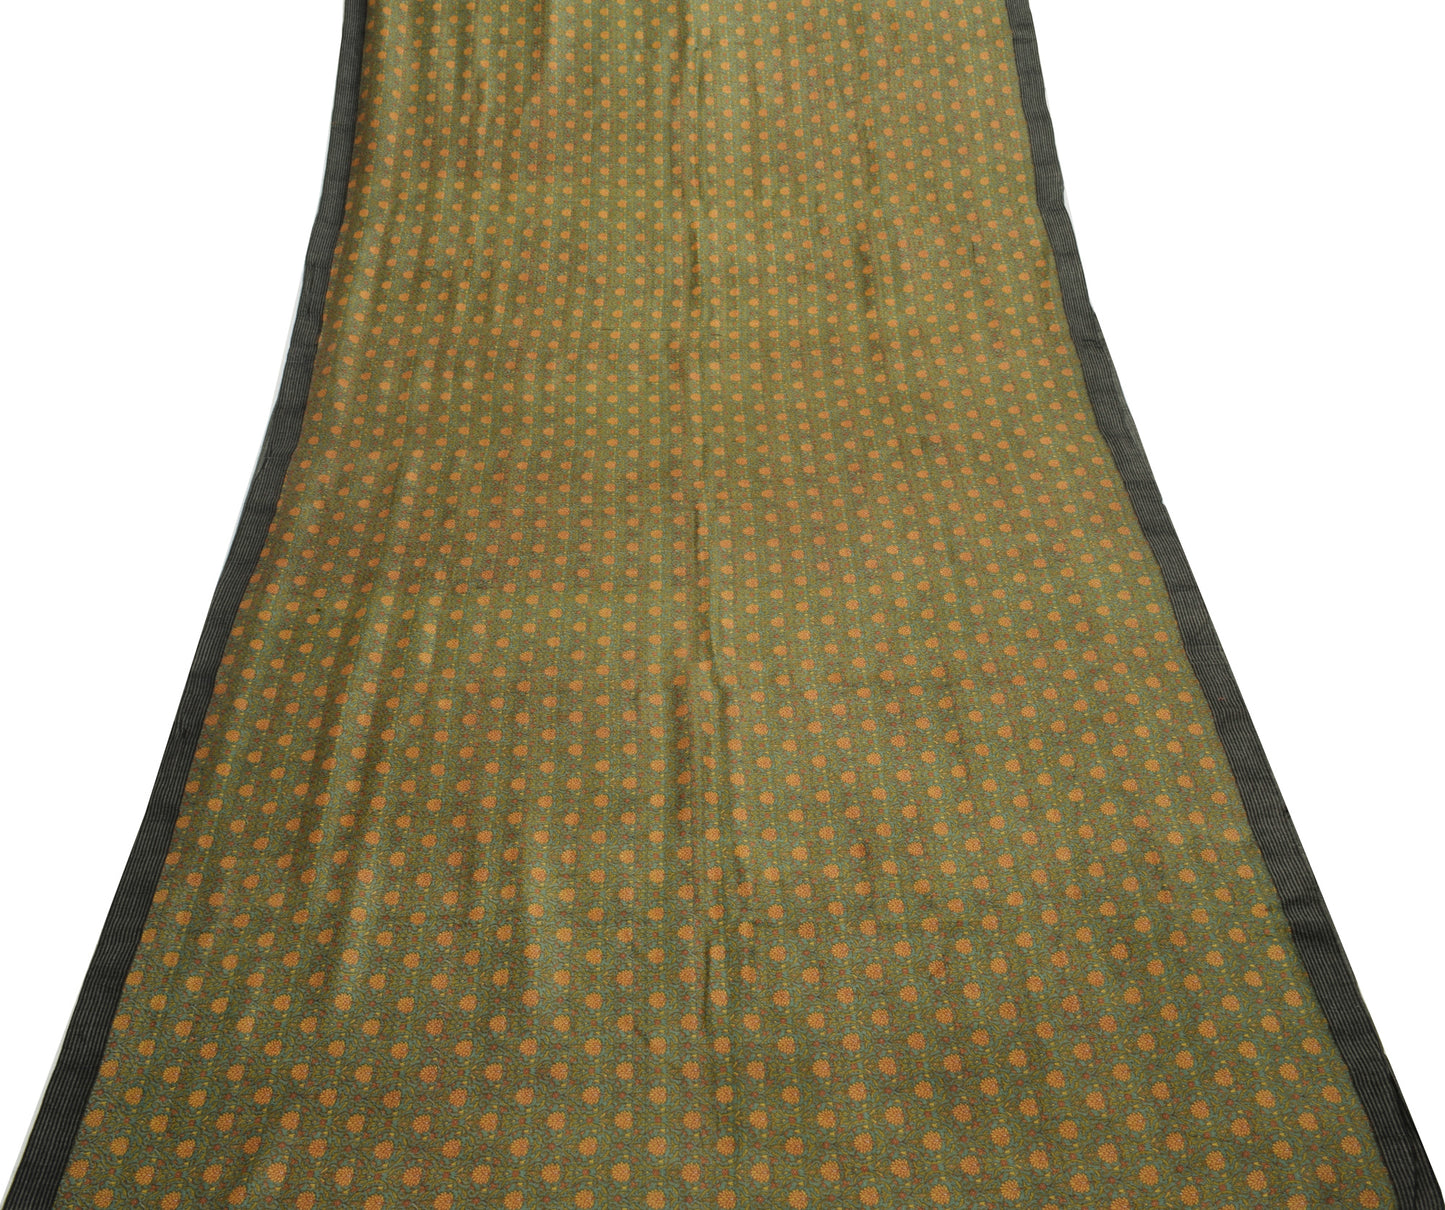 Sushila Vintage Gary Saree 100% Pure Woolen Woven Floral Soft Sari Craft Fabric